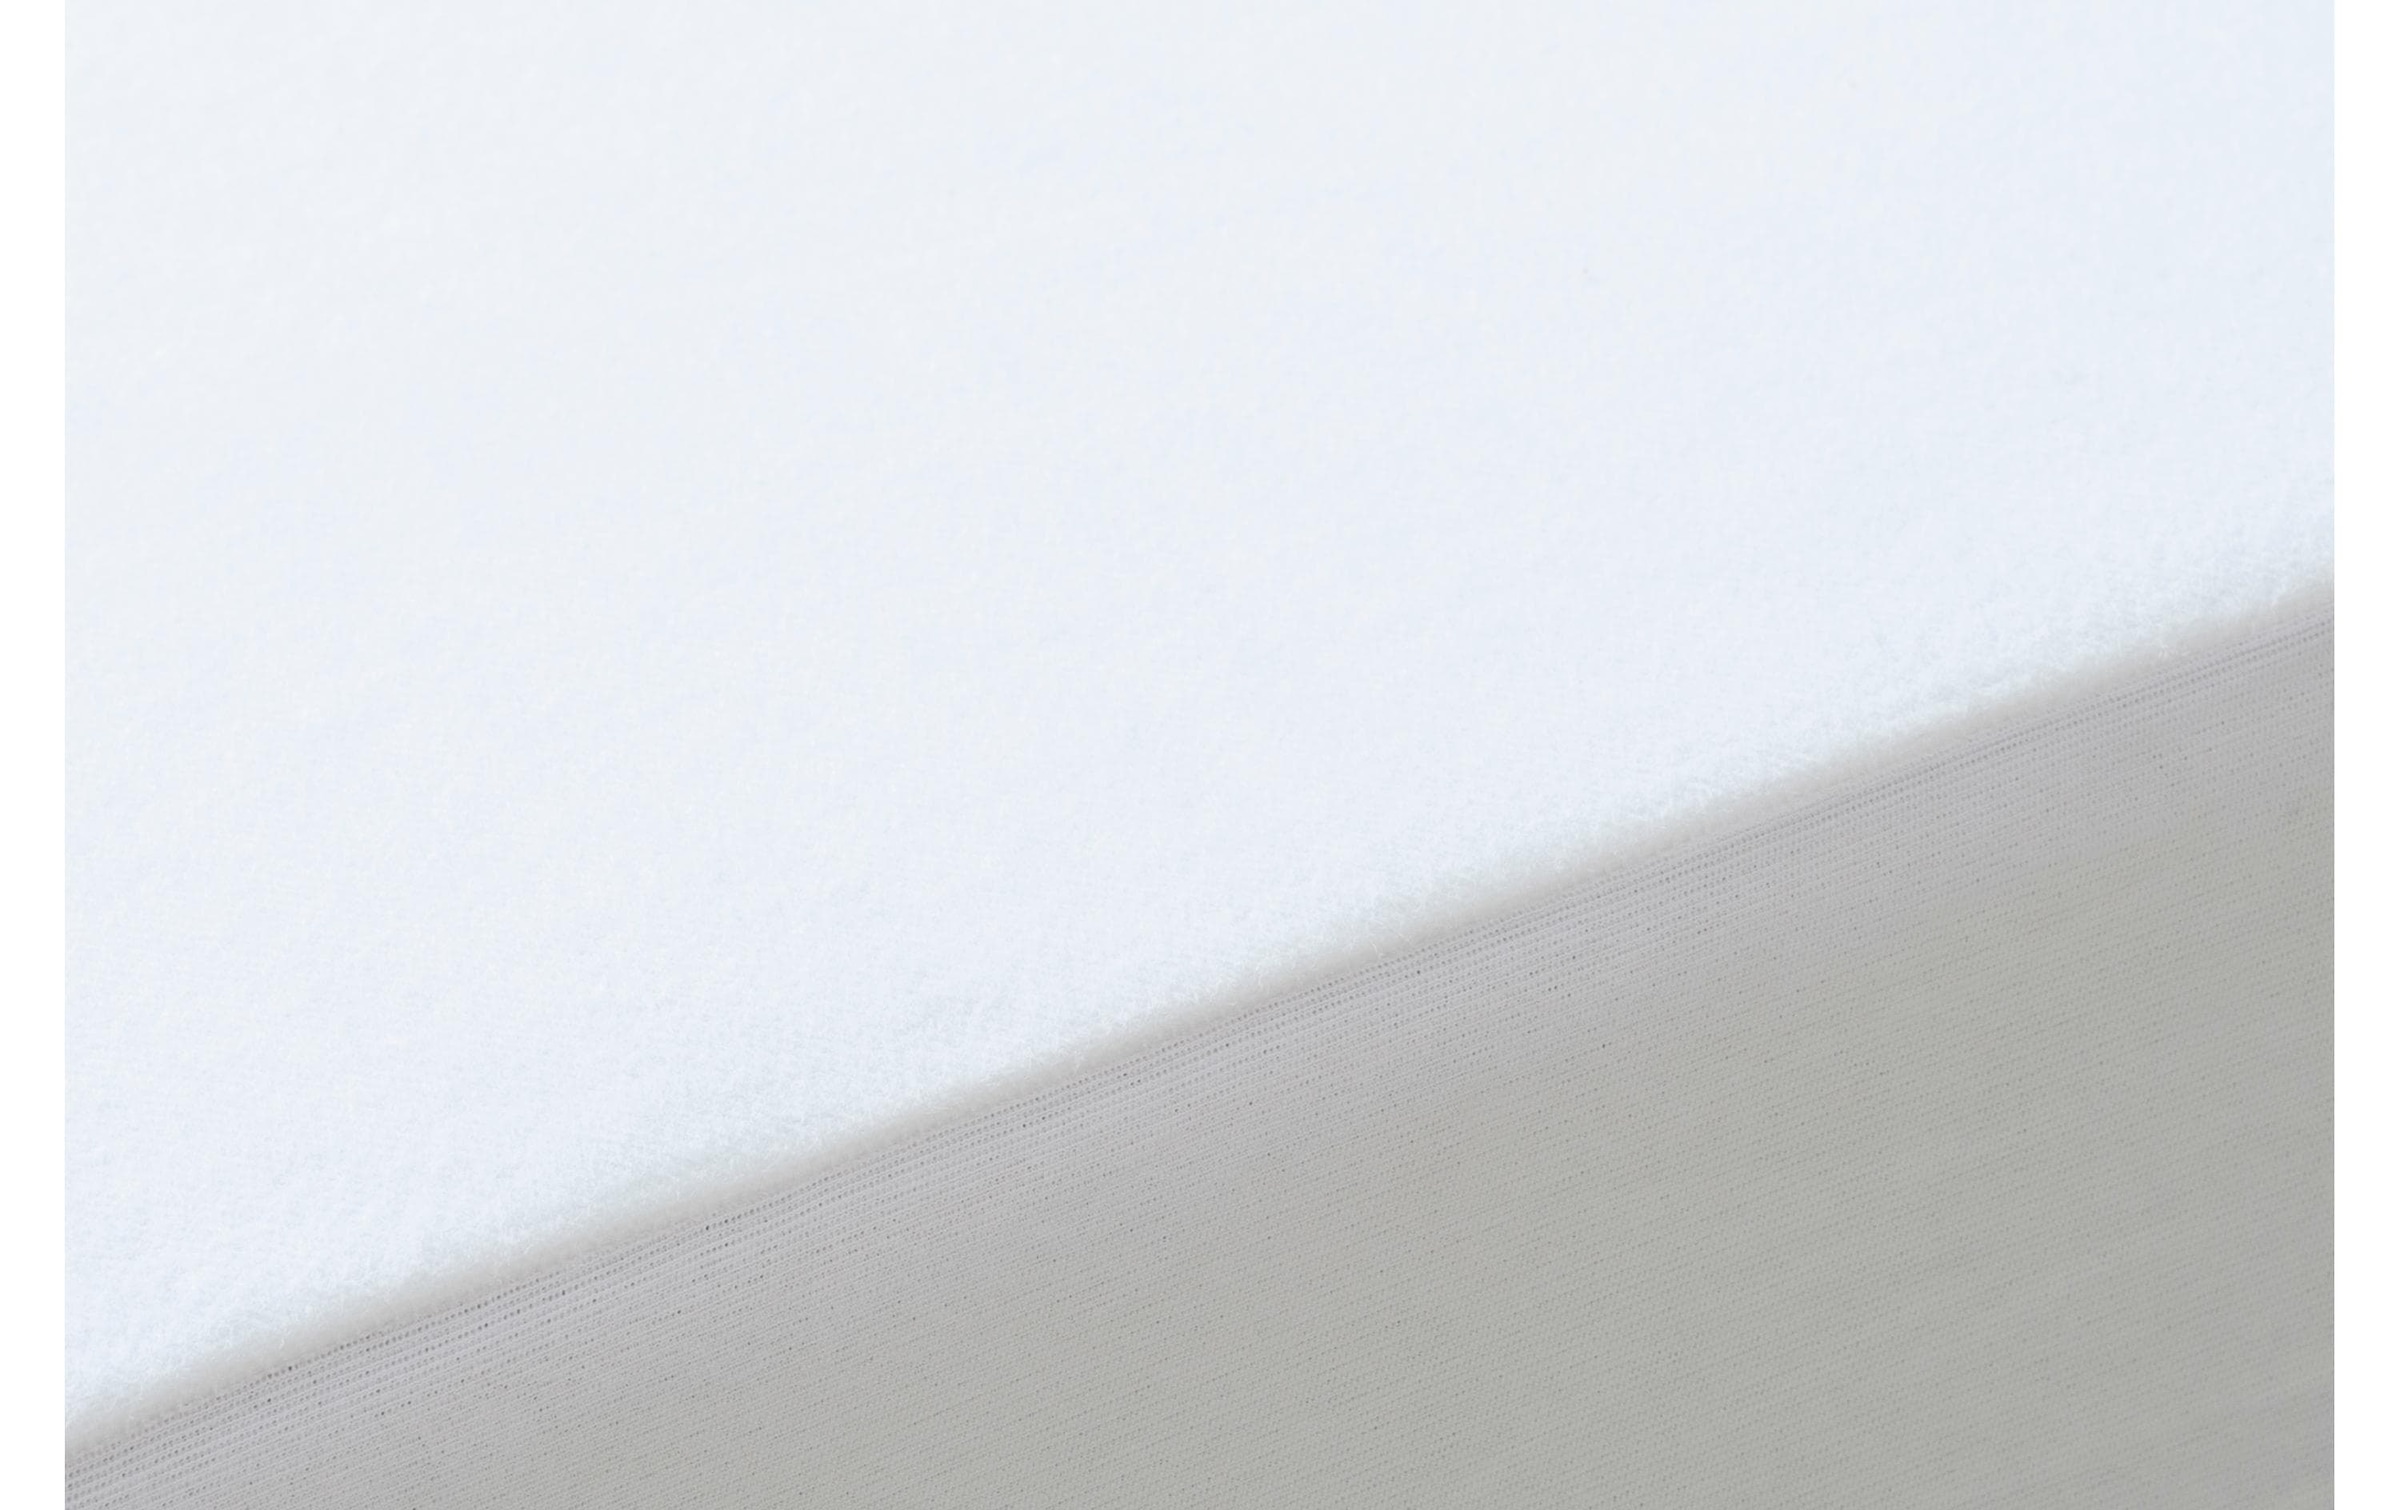 Matratzenschutzbezug »Velfont Eco Brisa 180 x 200 cm, Weiss«